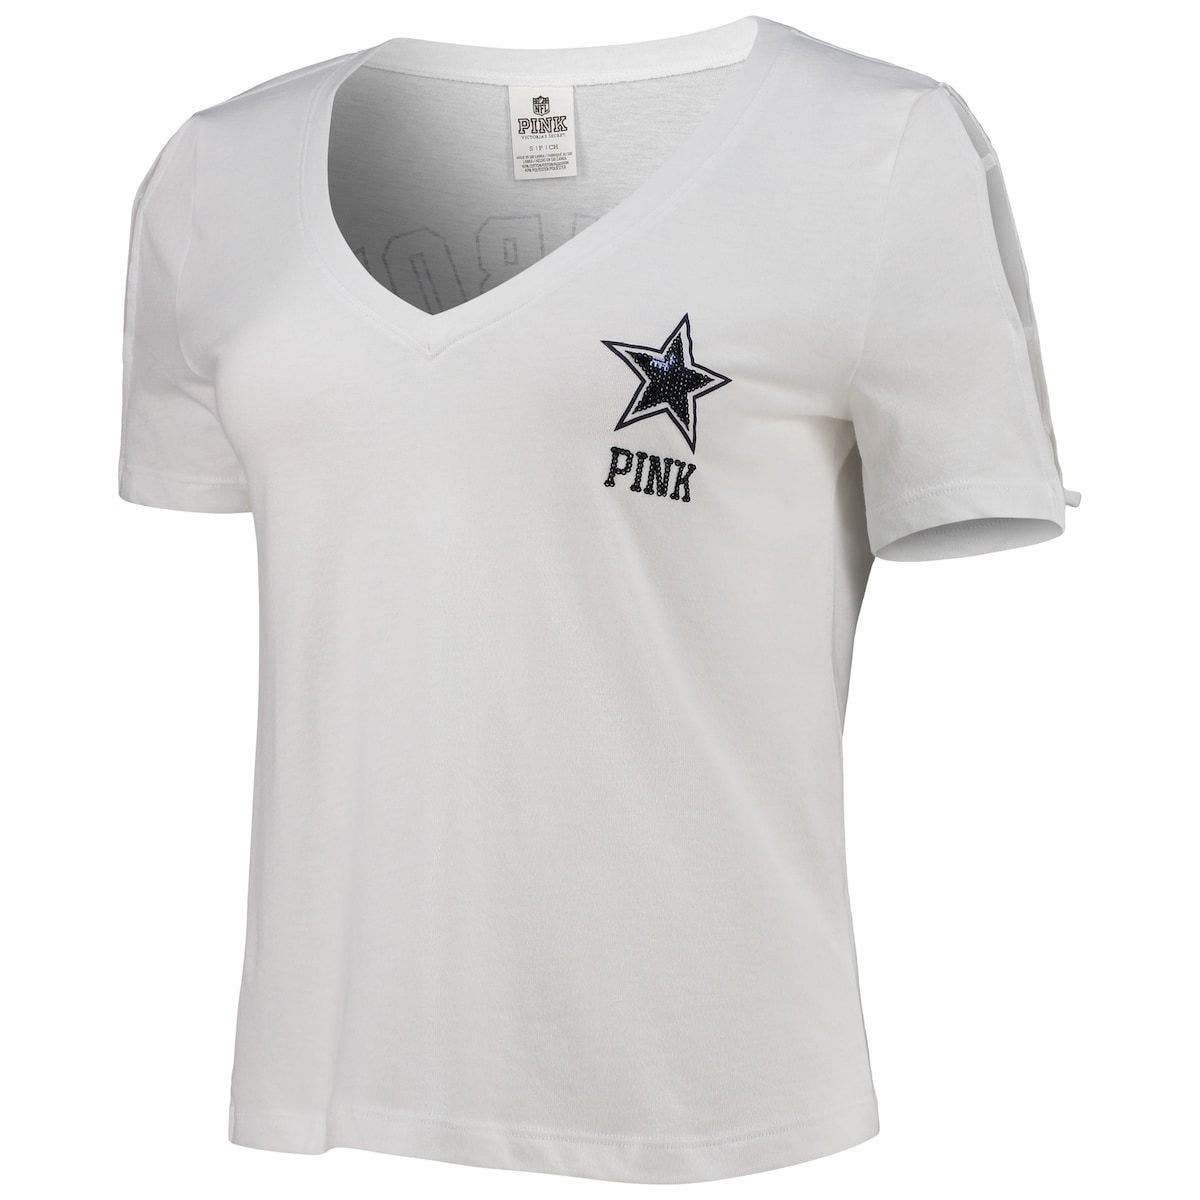 Victorias Secret PINK Perfect V-Neck Short Sleeve Tee T-Shirt Top White